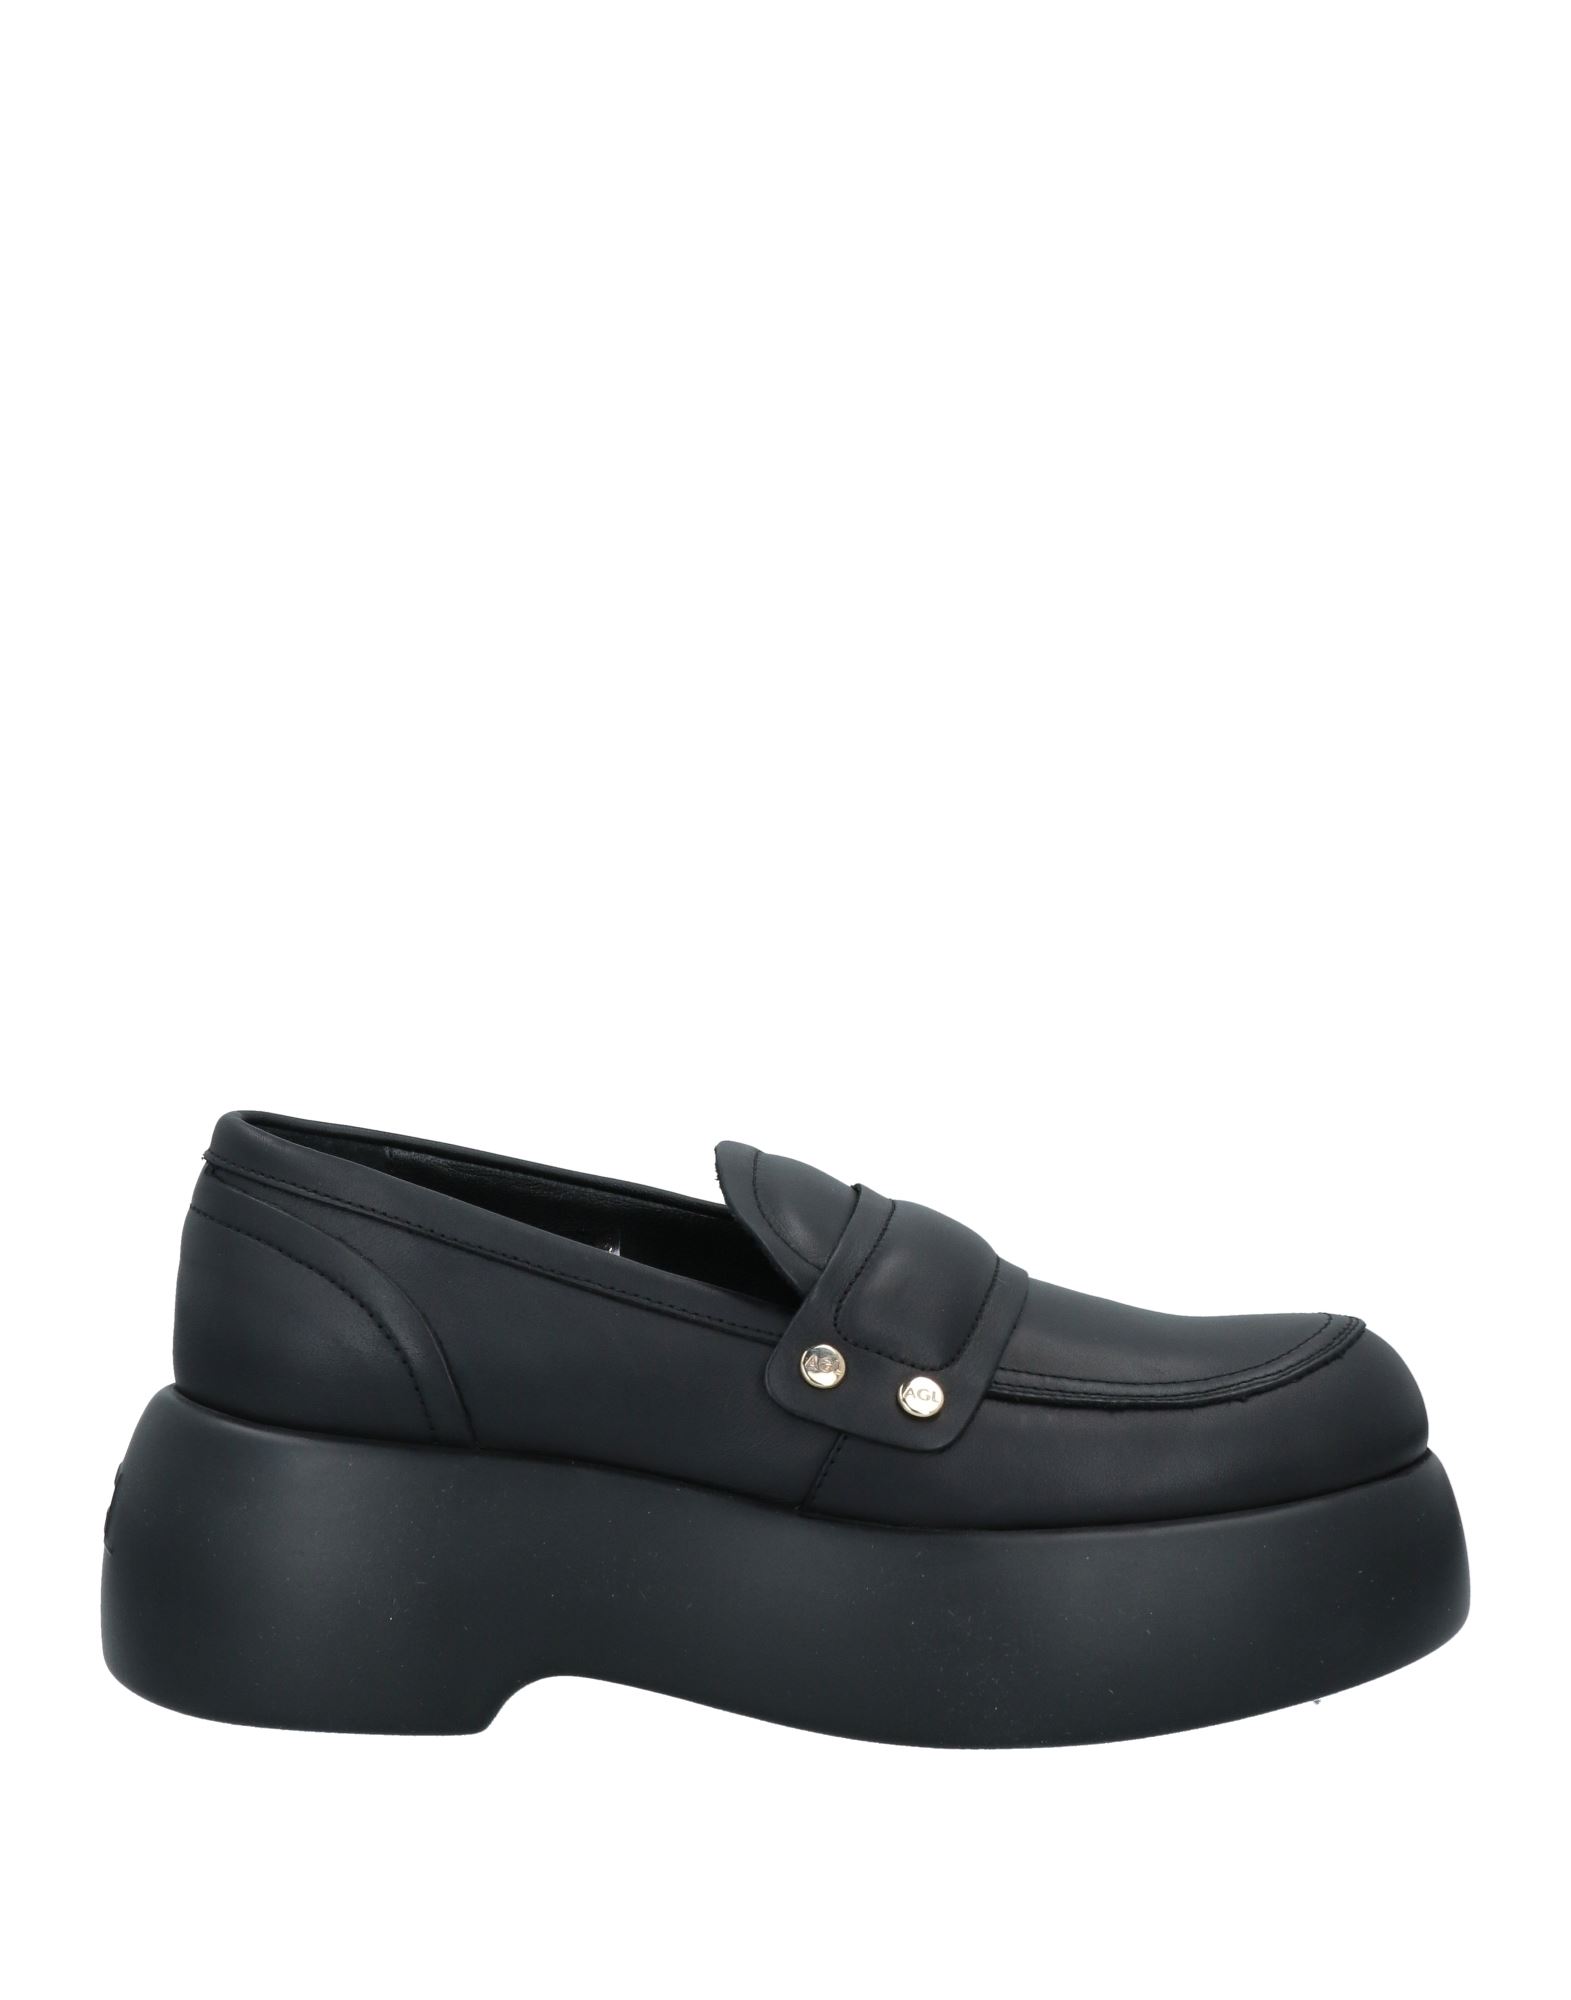 Shop Agl Attilio Giusti Leombruni Agl Woman Loafers Black Size 8 Soft Leather